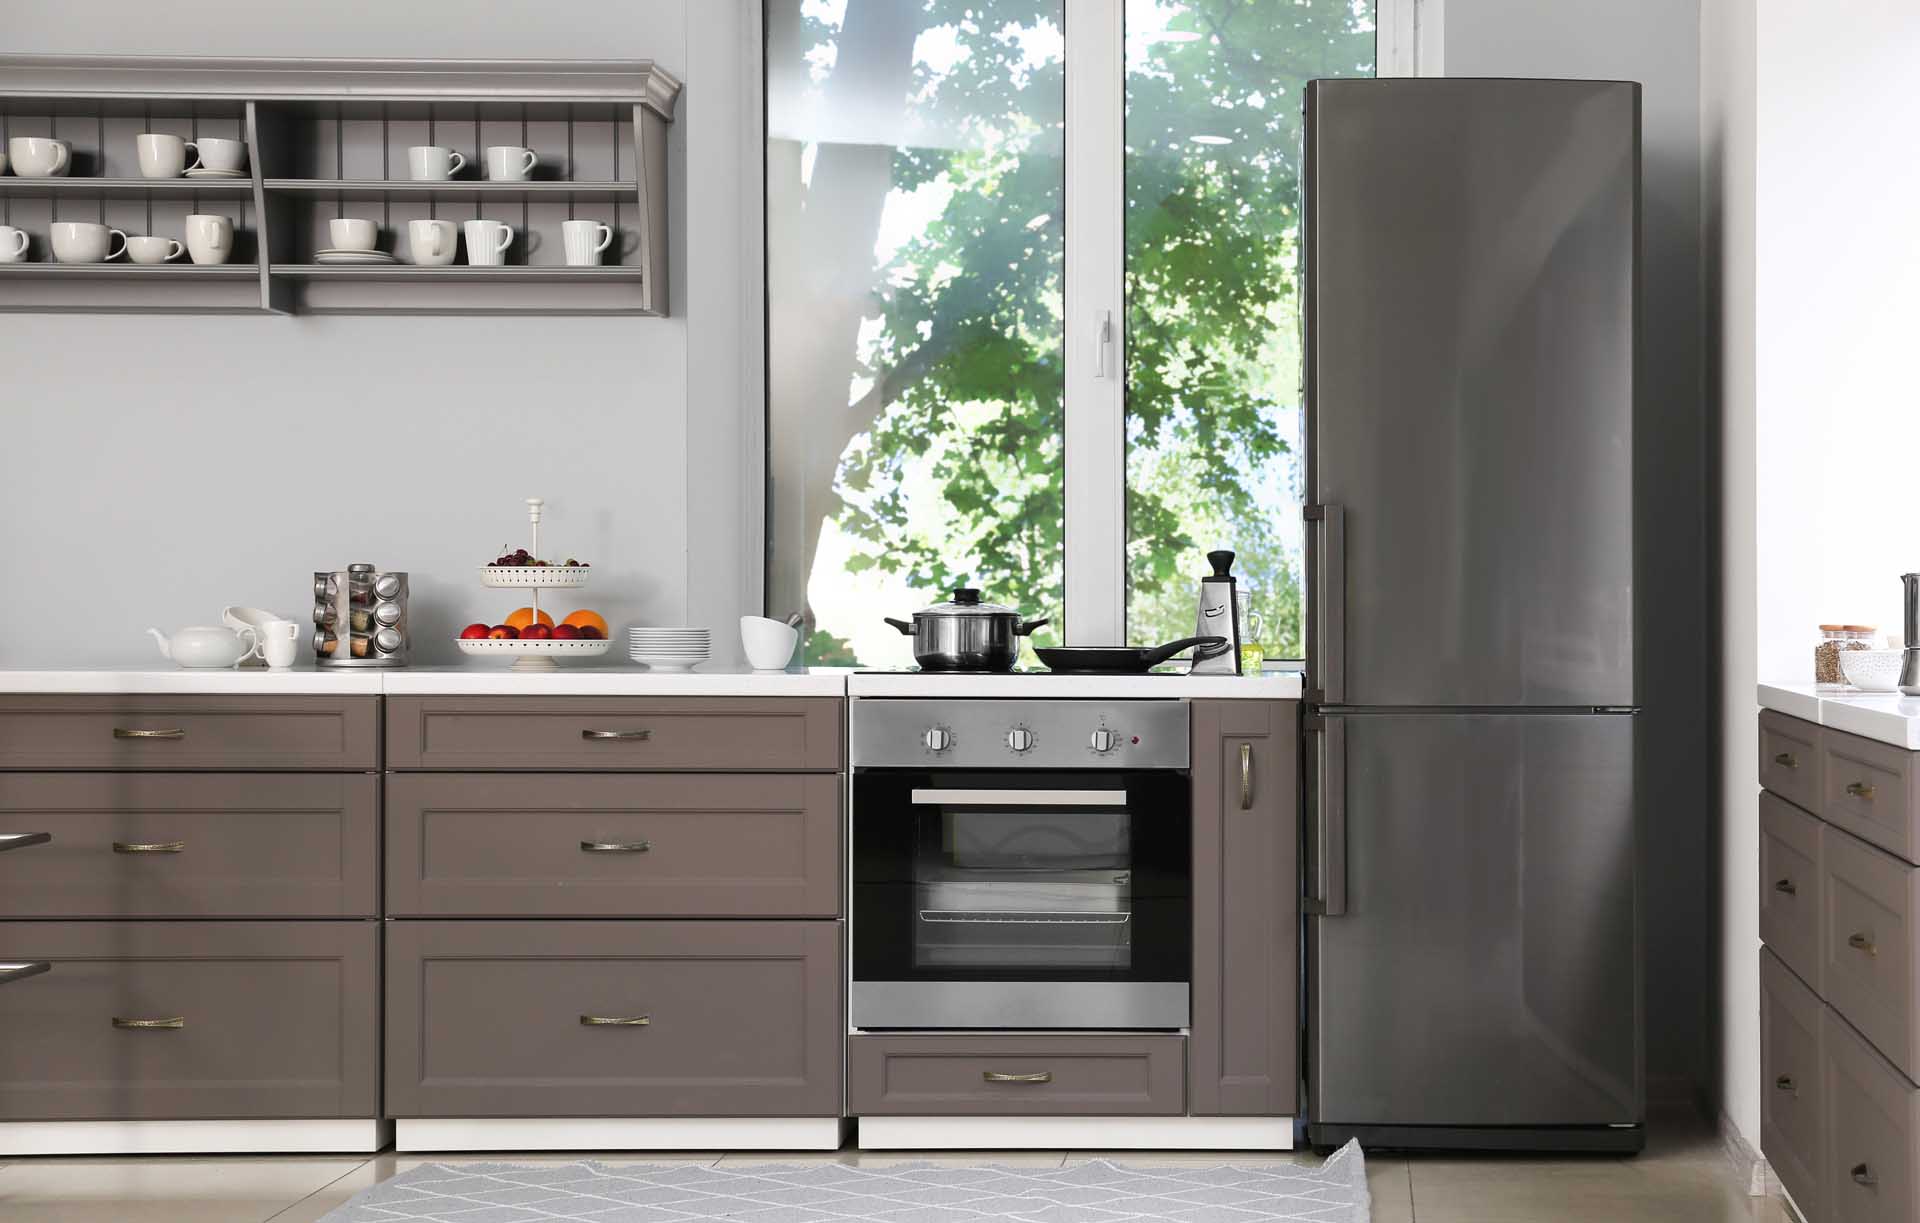 Interior of modern kitchen; Shutterstock ID 741329620; PO: 25pack; Job: 20180906; Client: tt; Other: aa